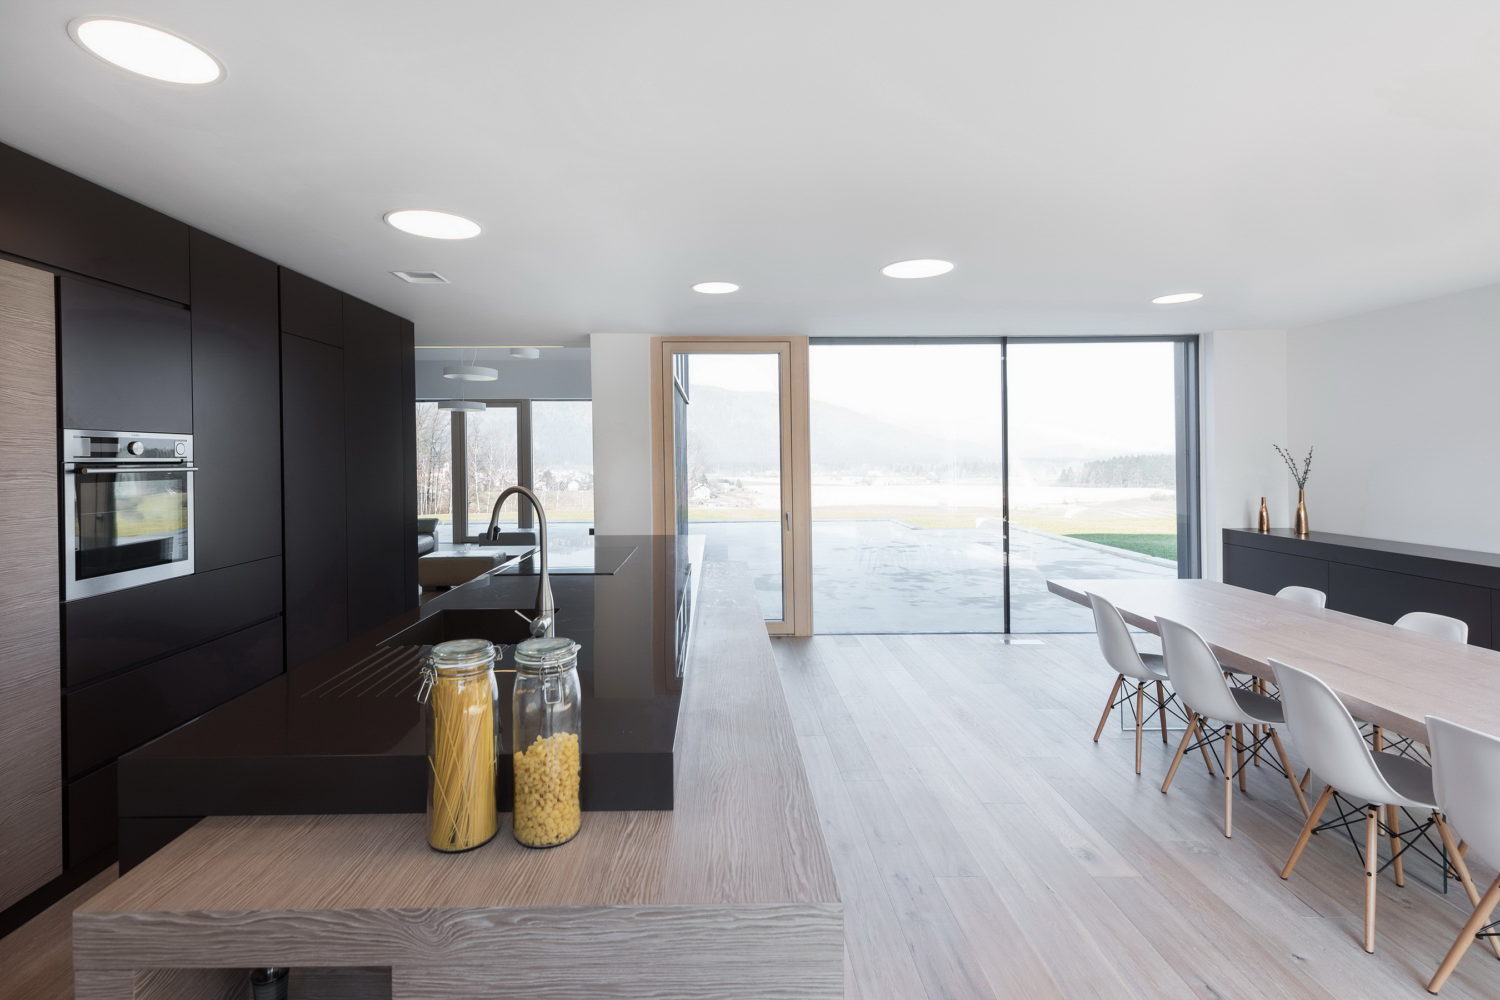 One-Family Villa M by SoNo Architects